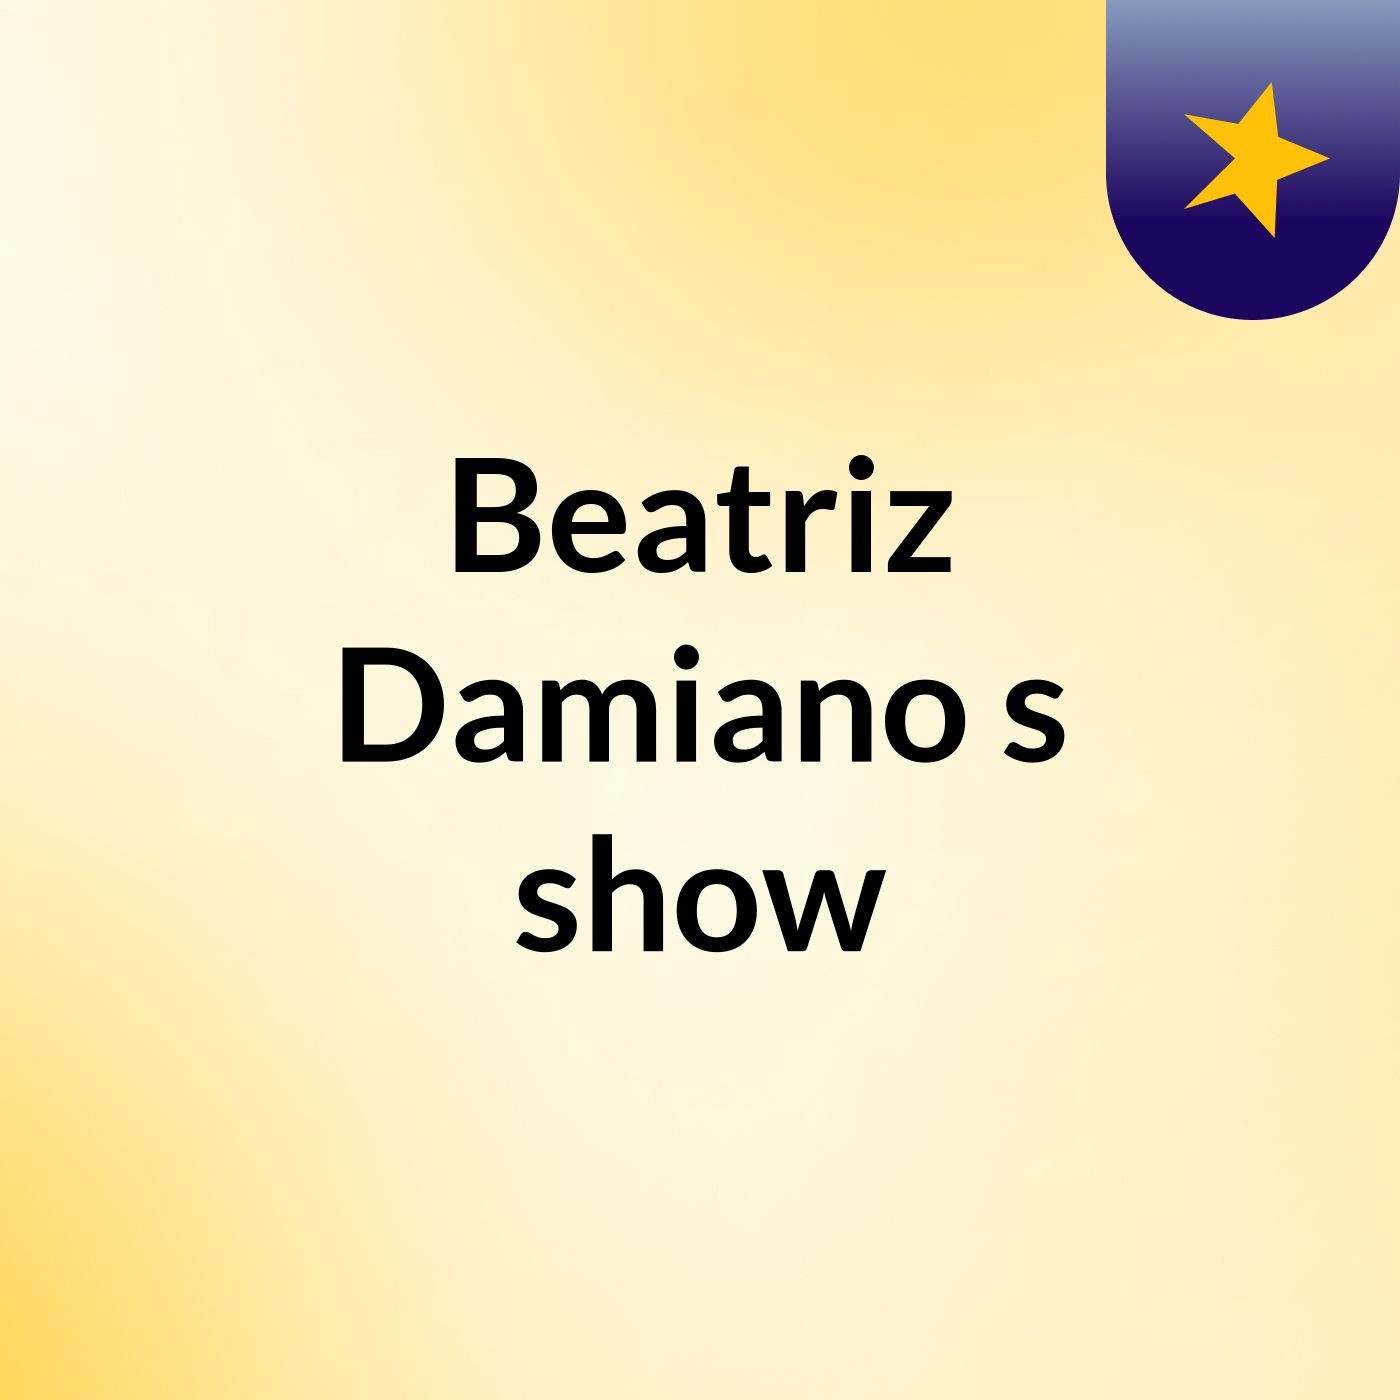 Beatriz Damiano's show